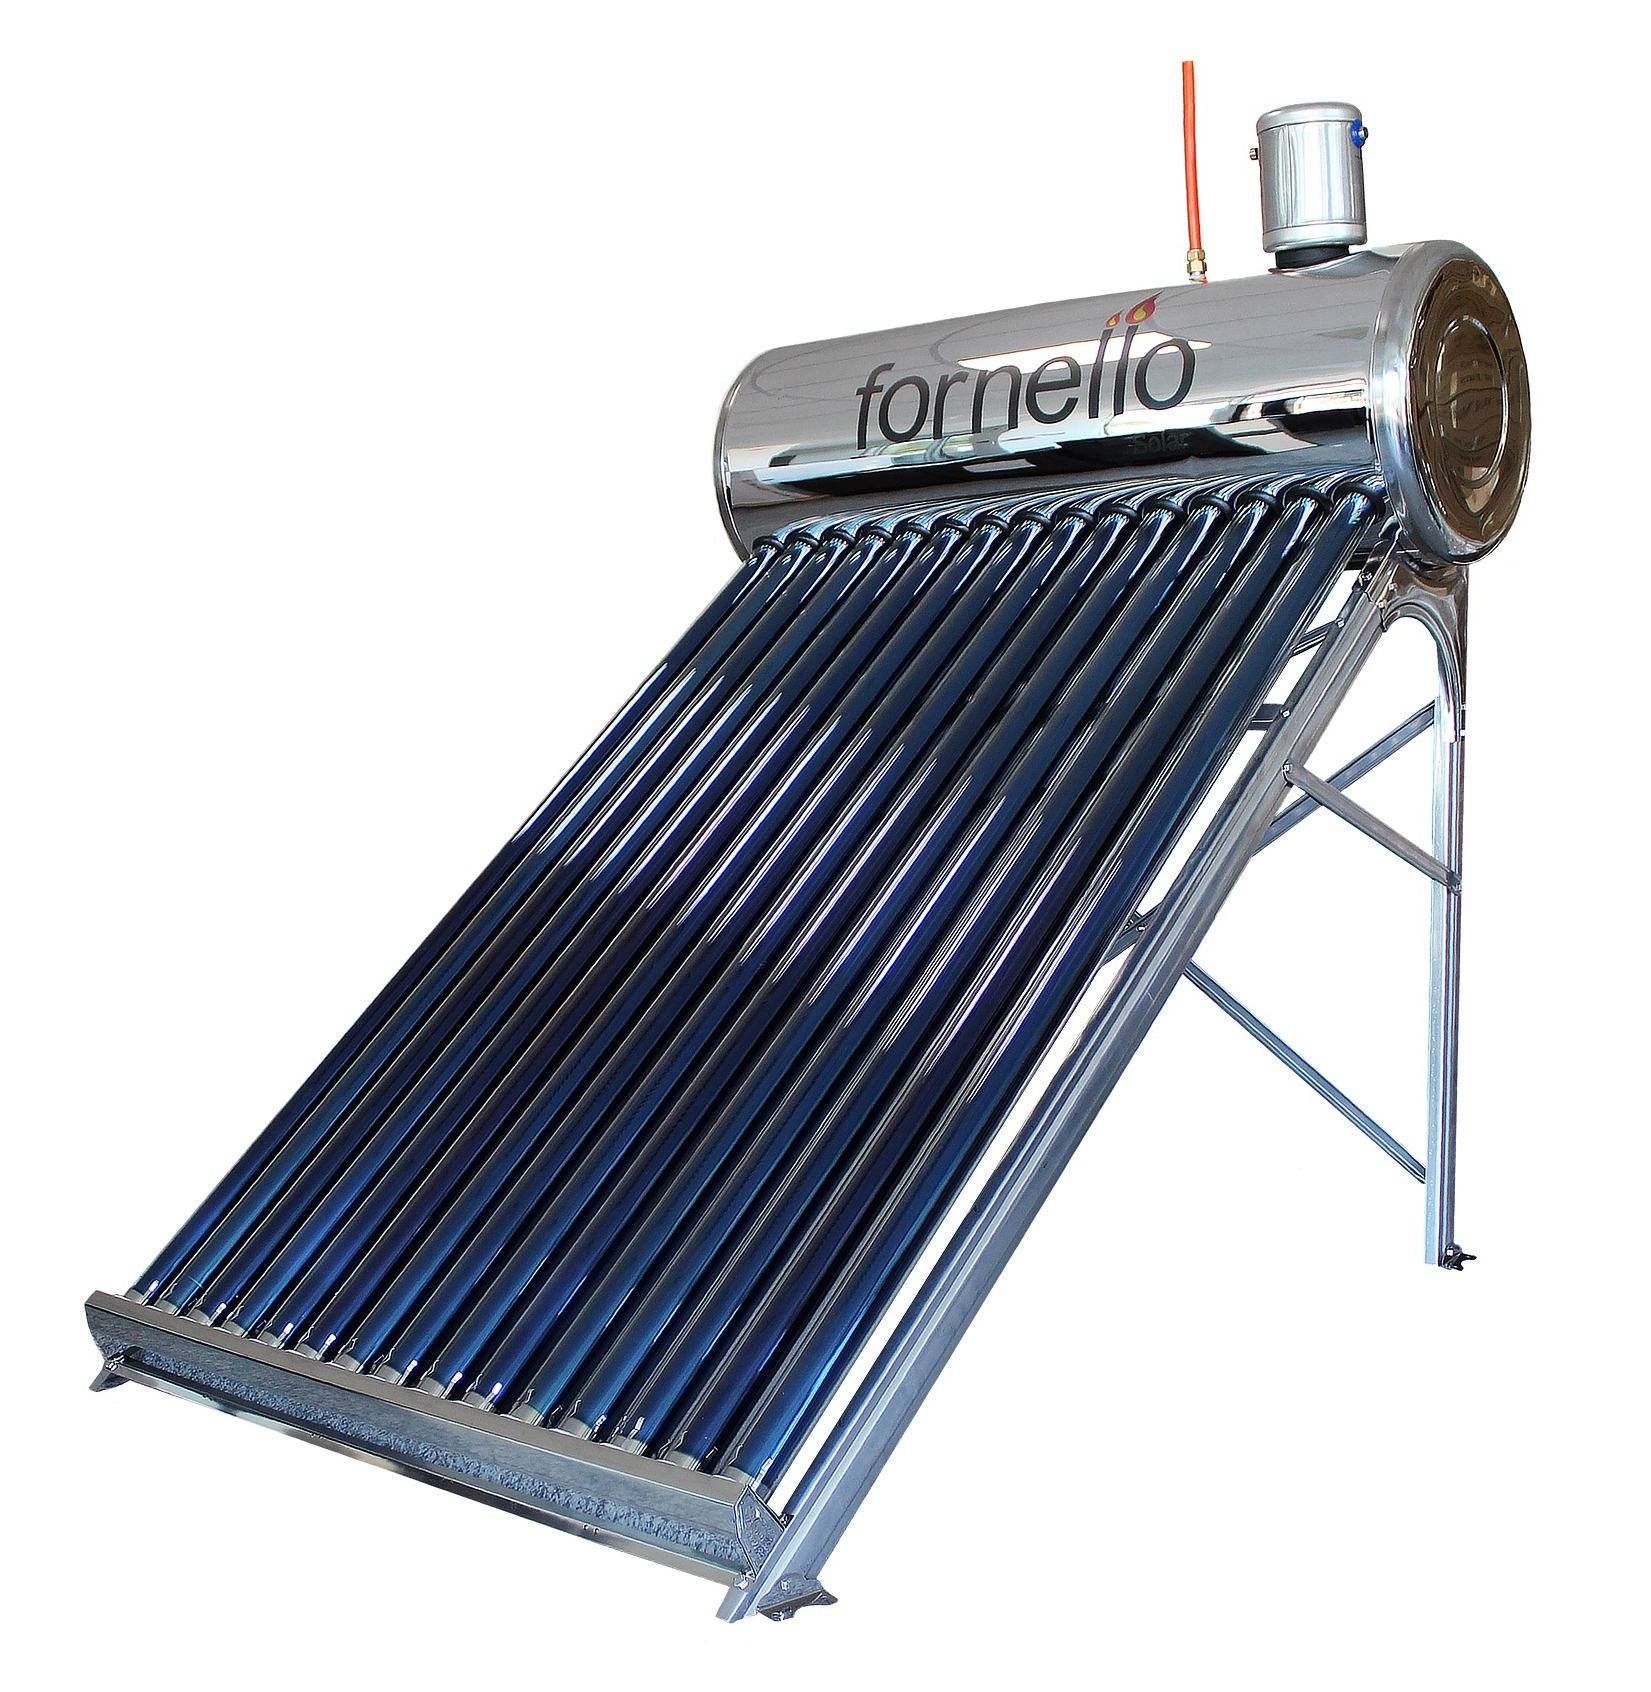 Panou solar nepresurizat Fornello pentru producere apa calda, cu rezervor inox 150 litri si 18 tuburi vidate fornello imagine